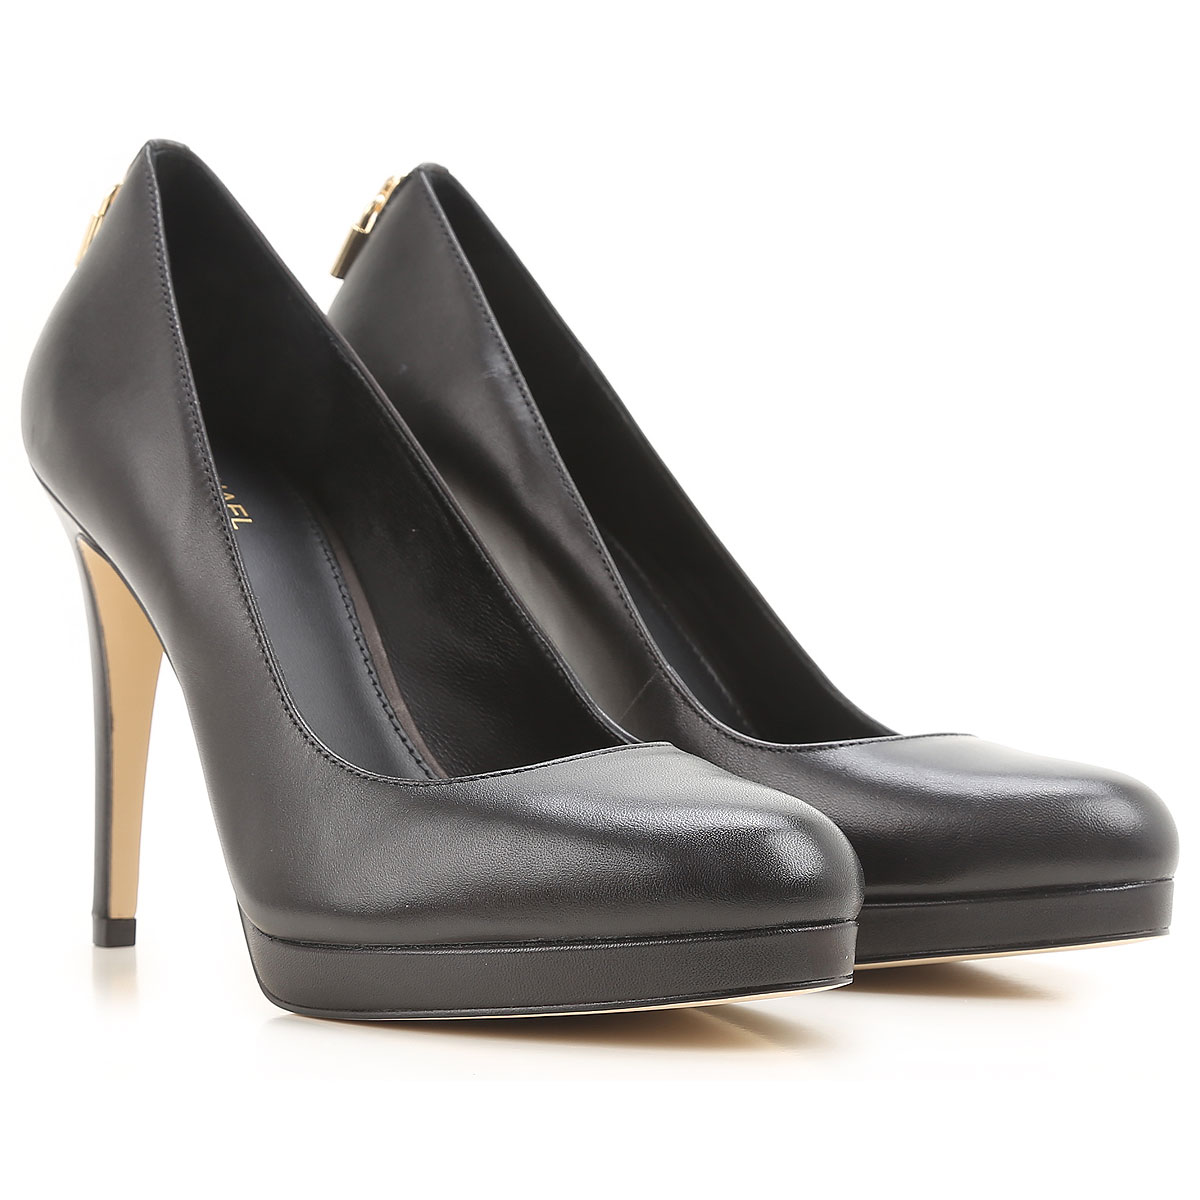 Womens Shoes Michael Kors, Style code: 40r7athp1l-001-black